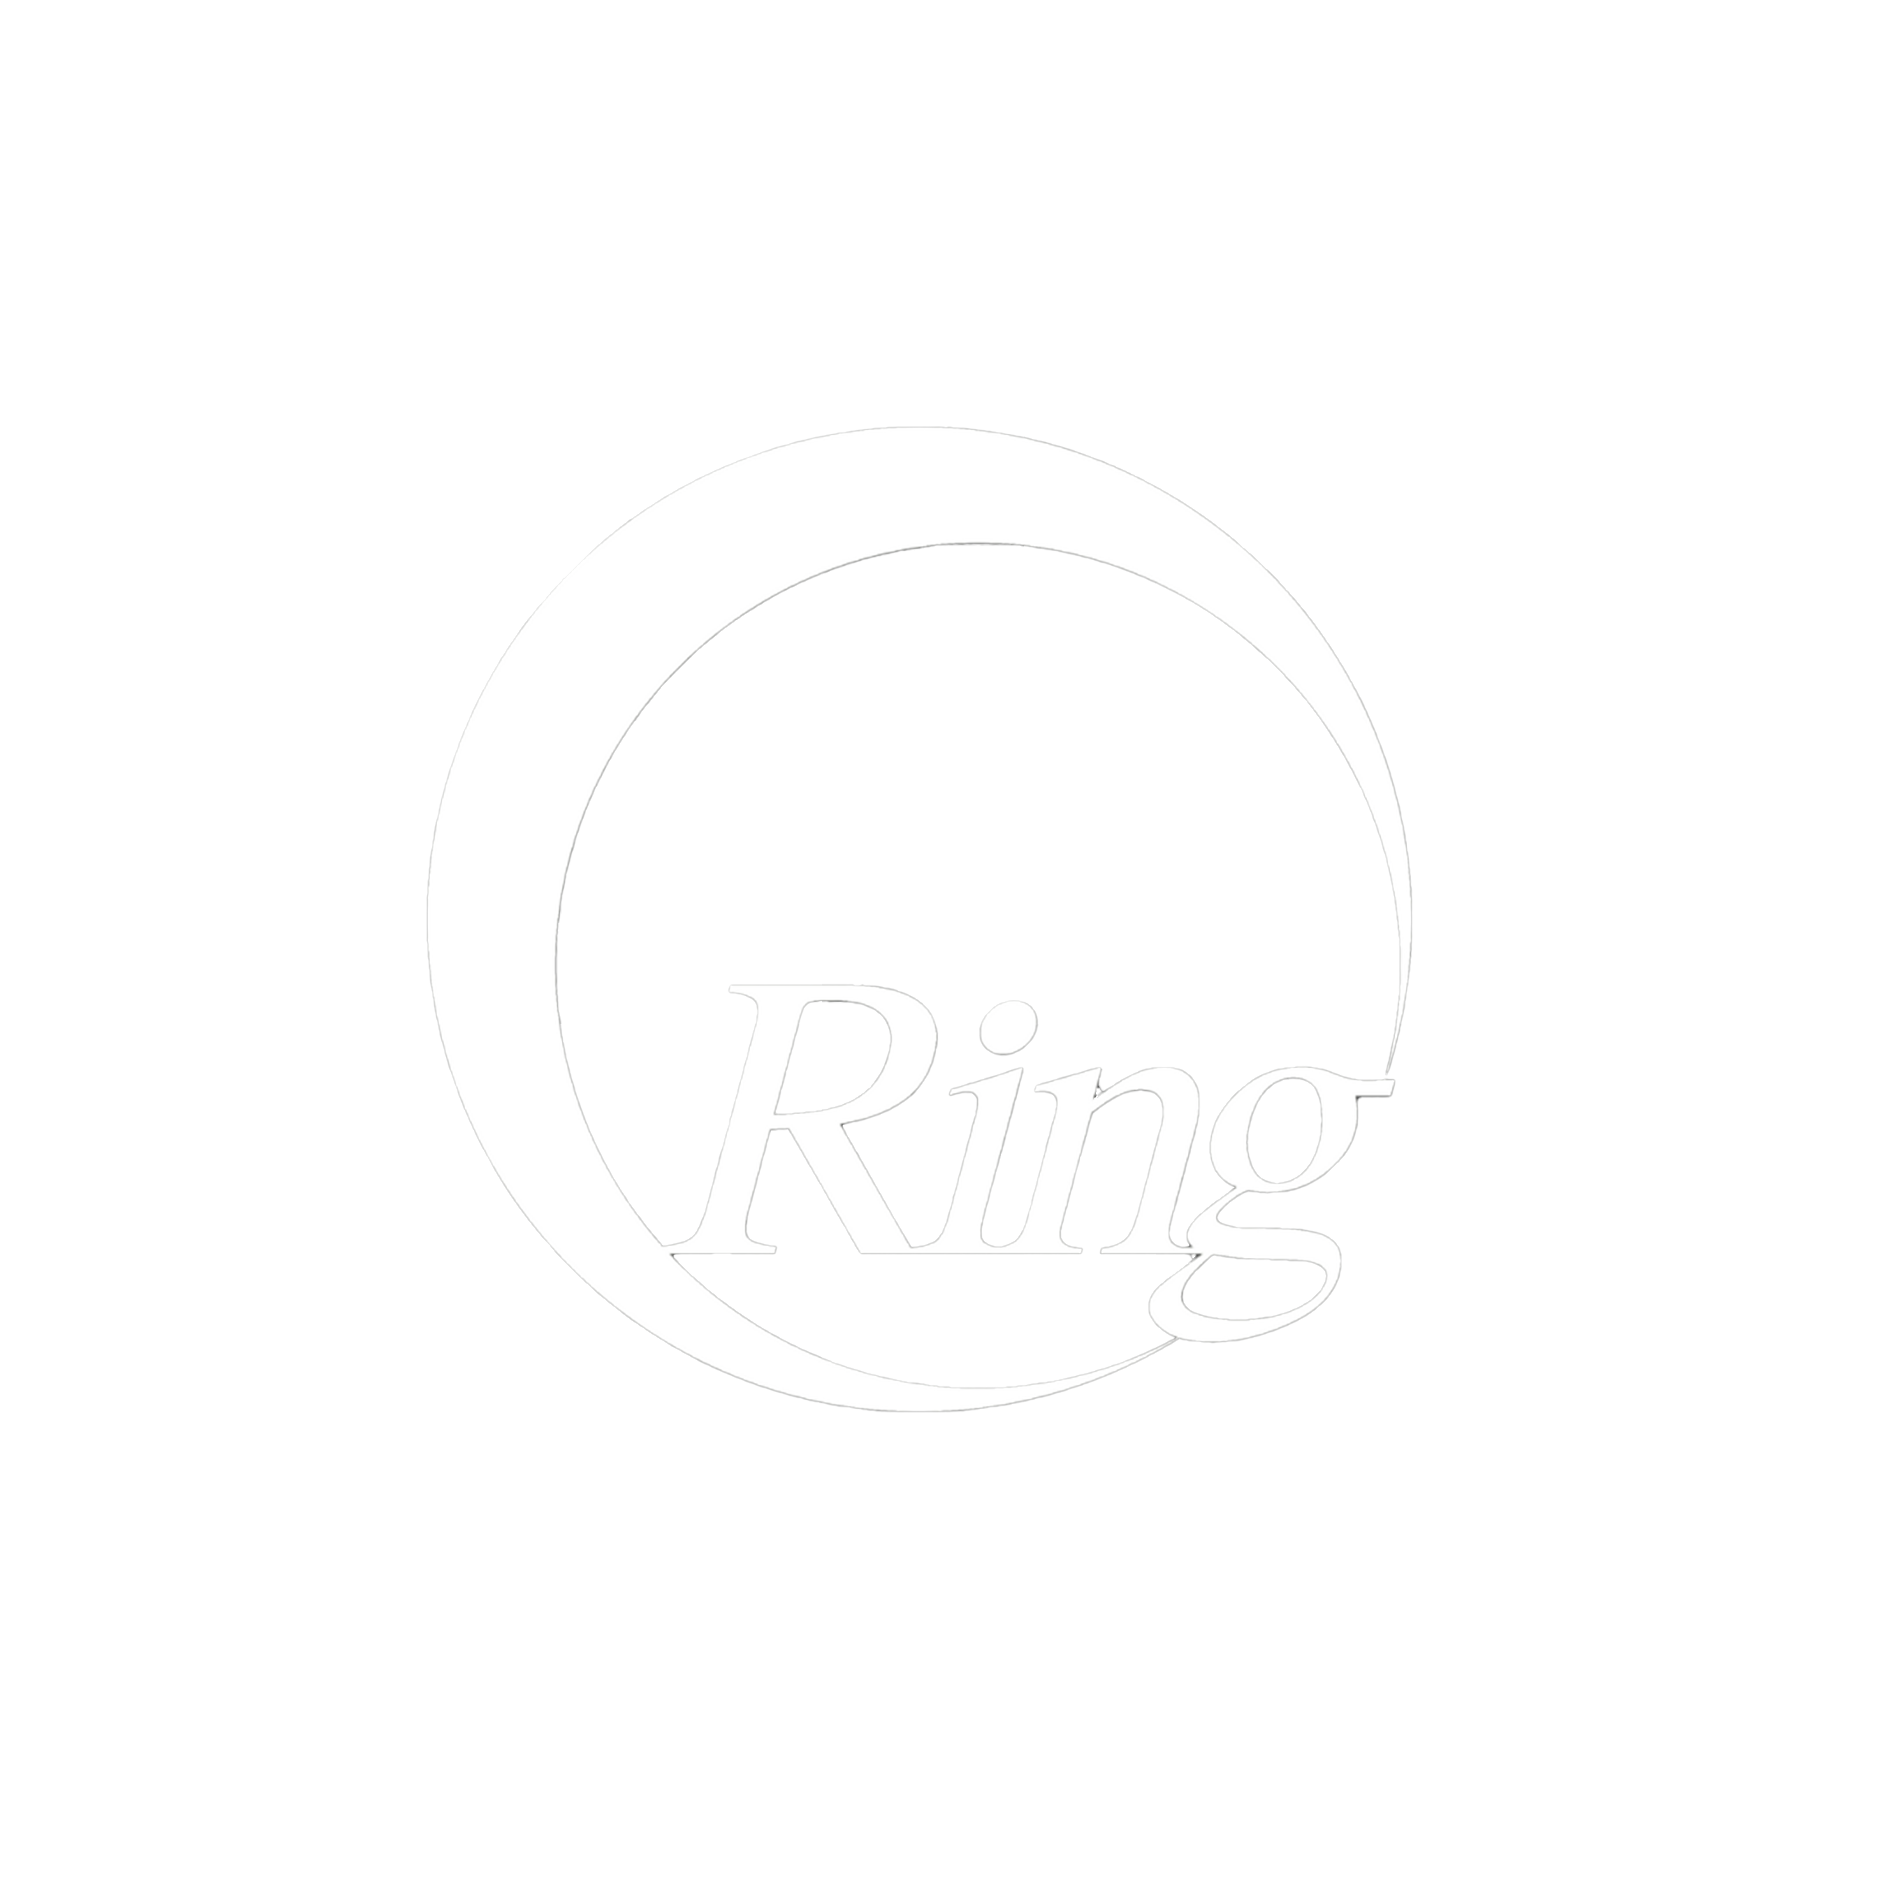 株式会社Ring